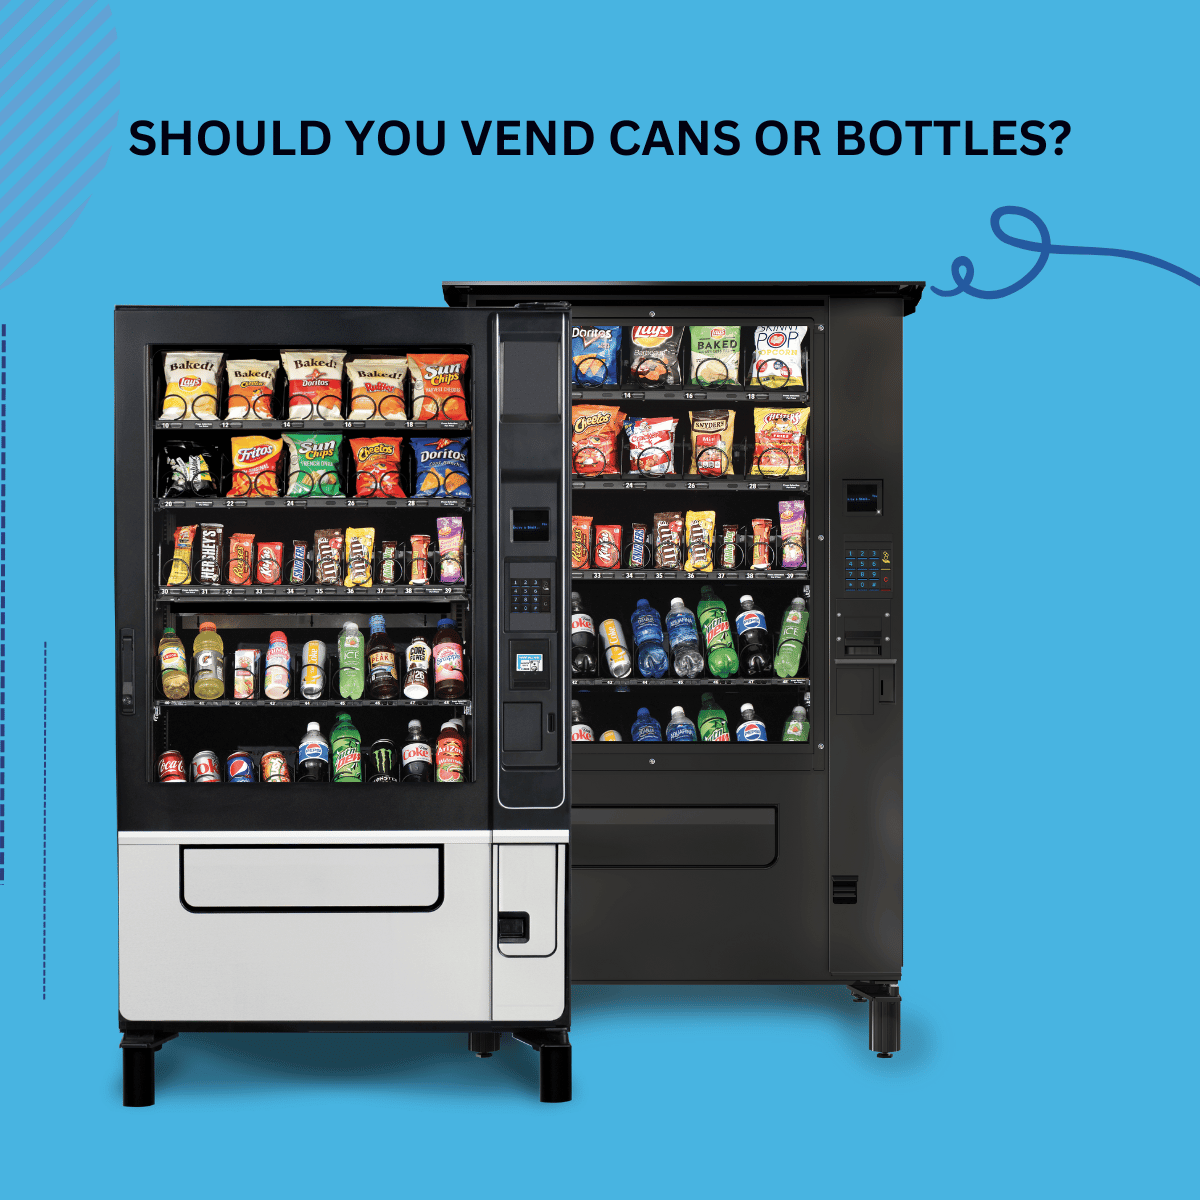 SHOULD YOU VEND CANS OR BOTTLES?